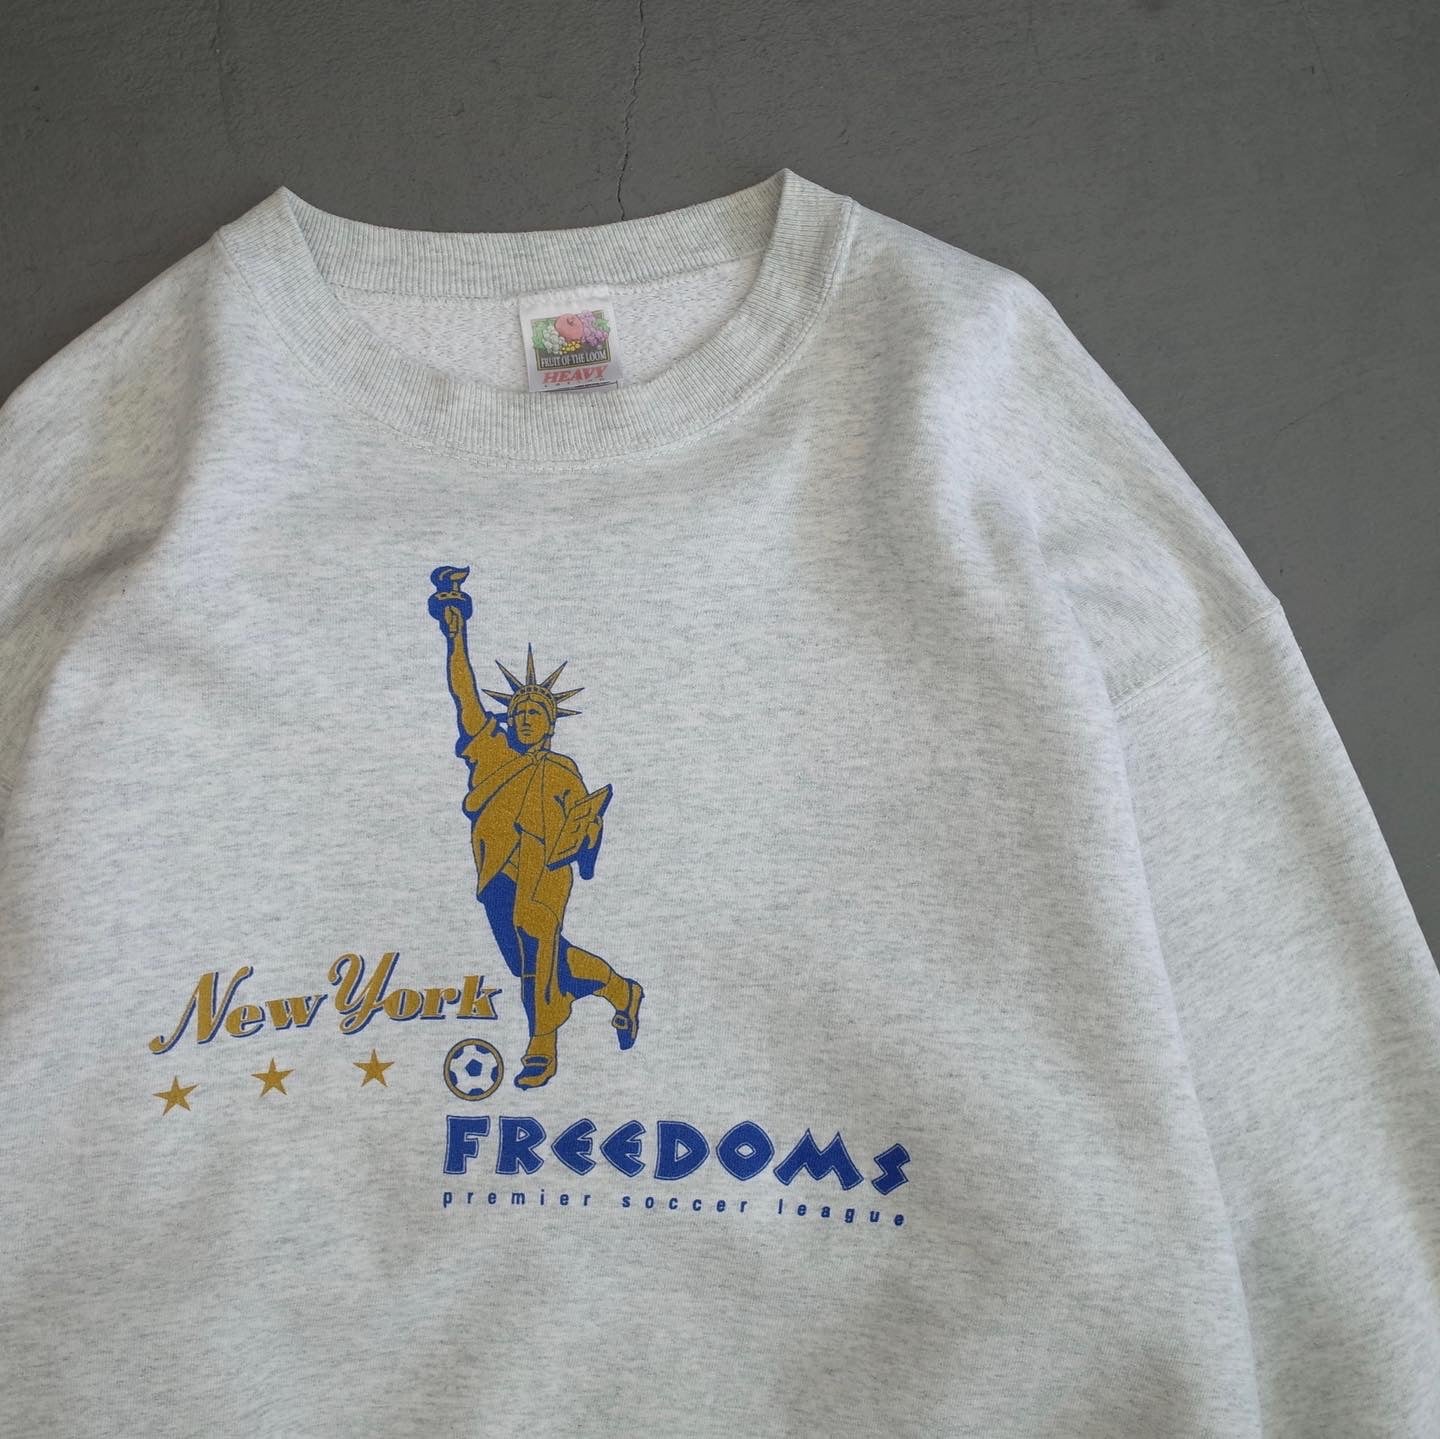 New York Freedom Premier Soccer League Sweatshirt